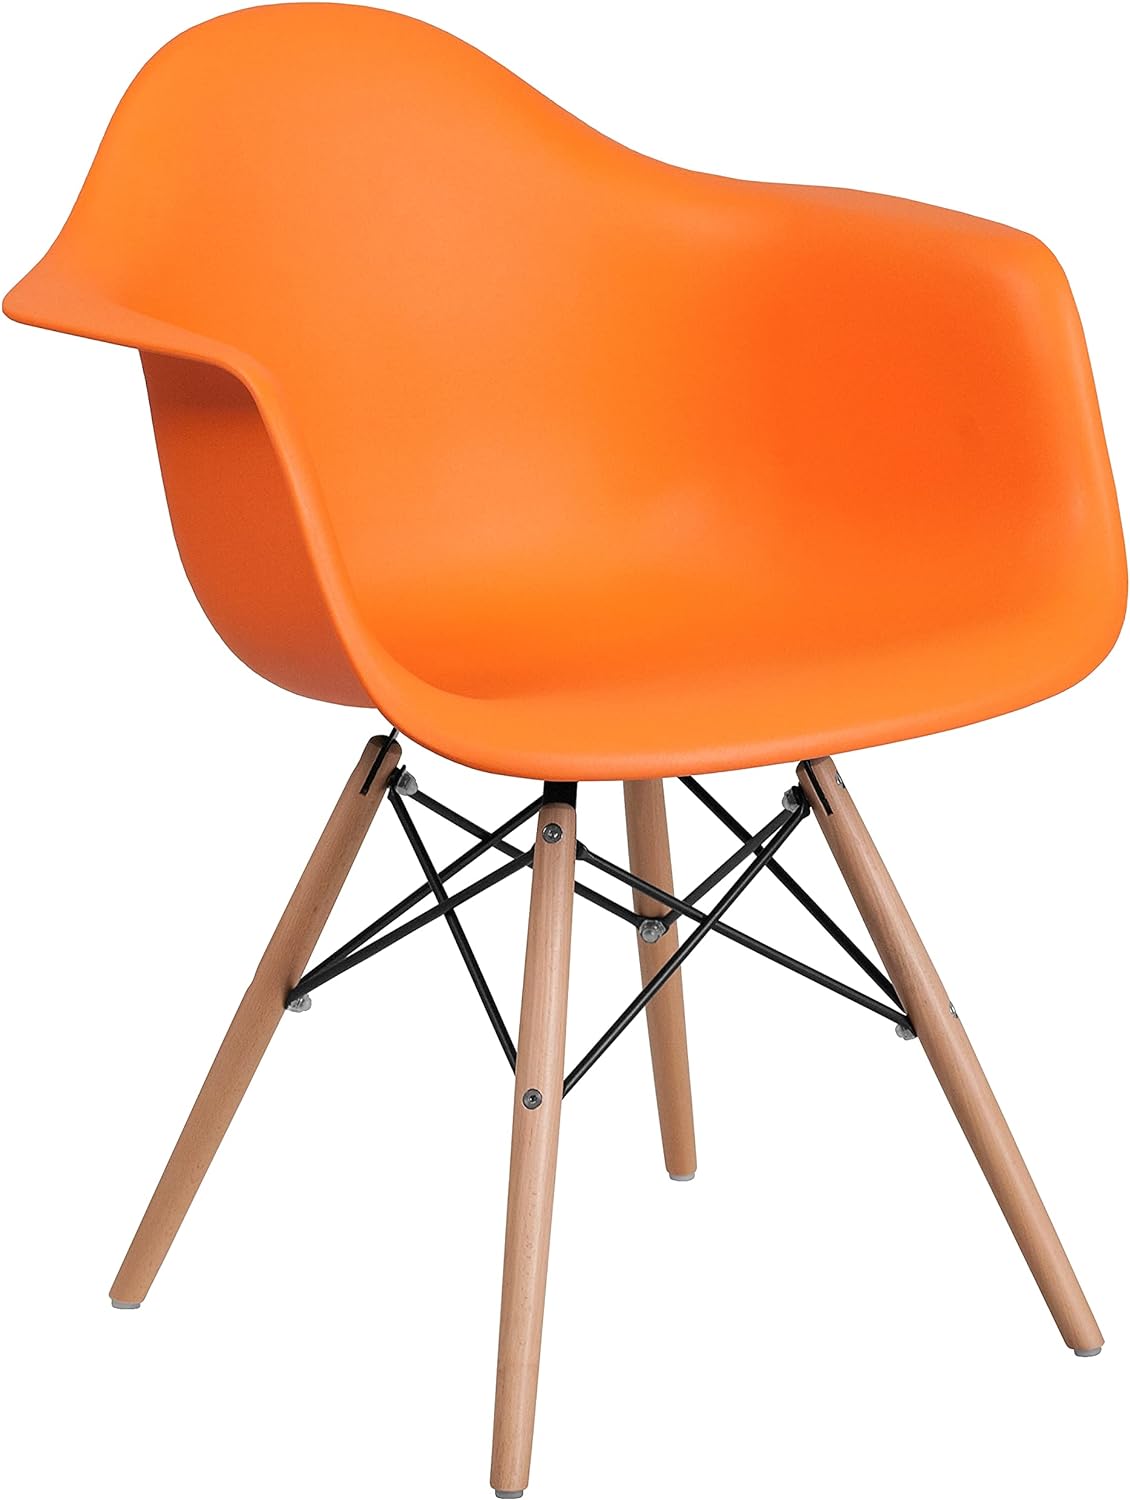 Flash Furniture Alonza Series Orange Plastic Chair with Wooden Legs